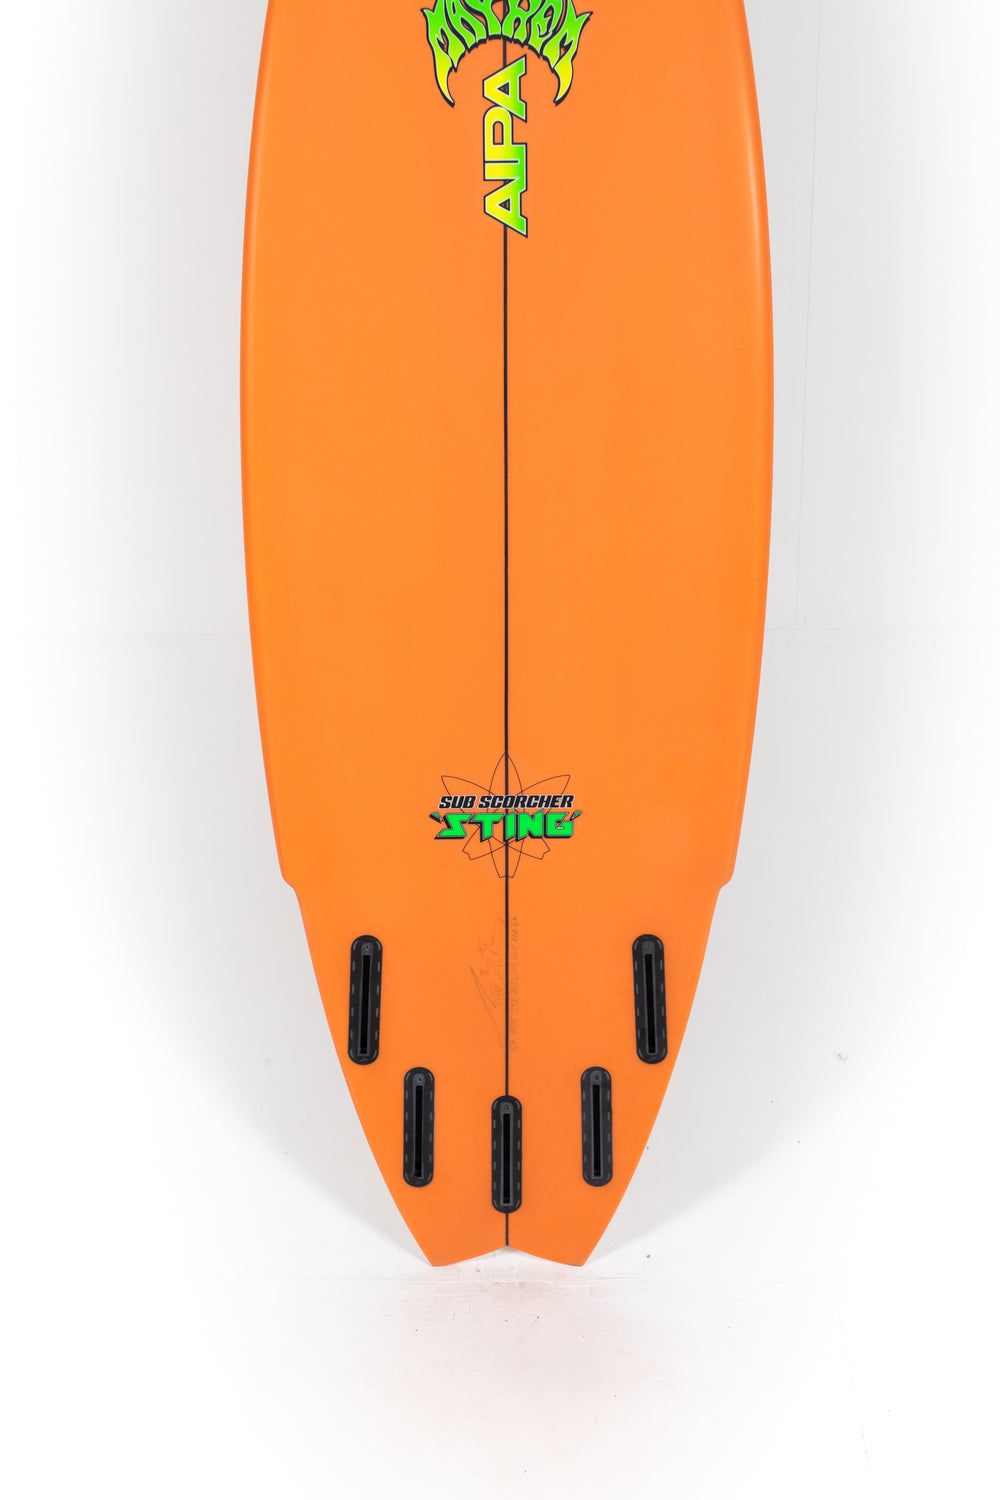 Lost Surfboard - SUB SCORCHER STING by Mayhem x Aipa - 5'9” x 19 